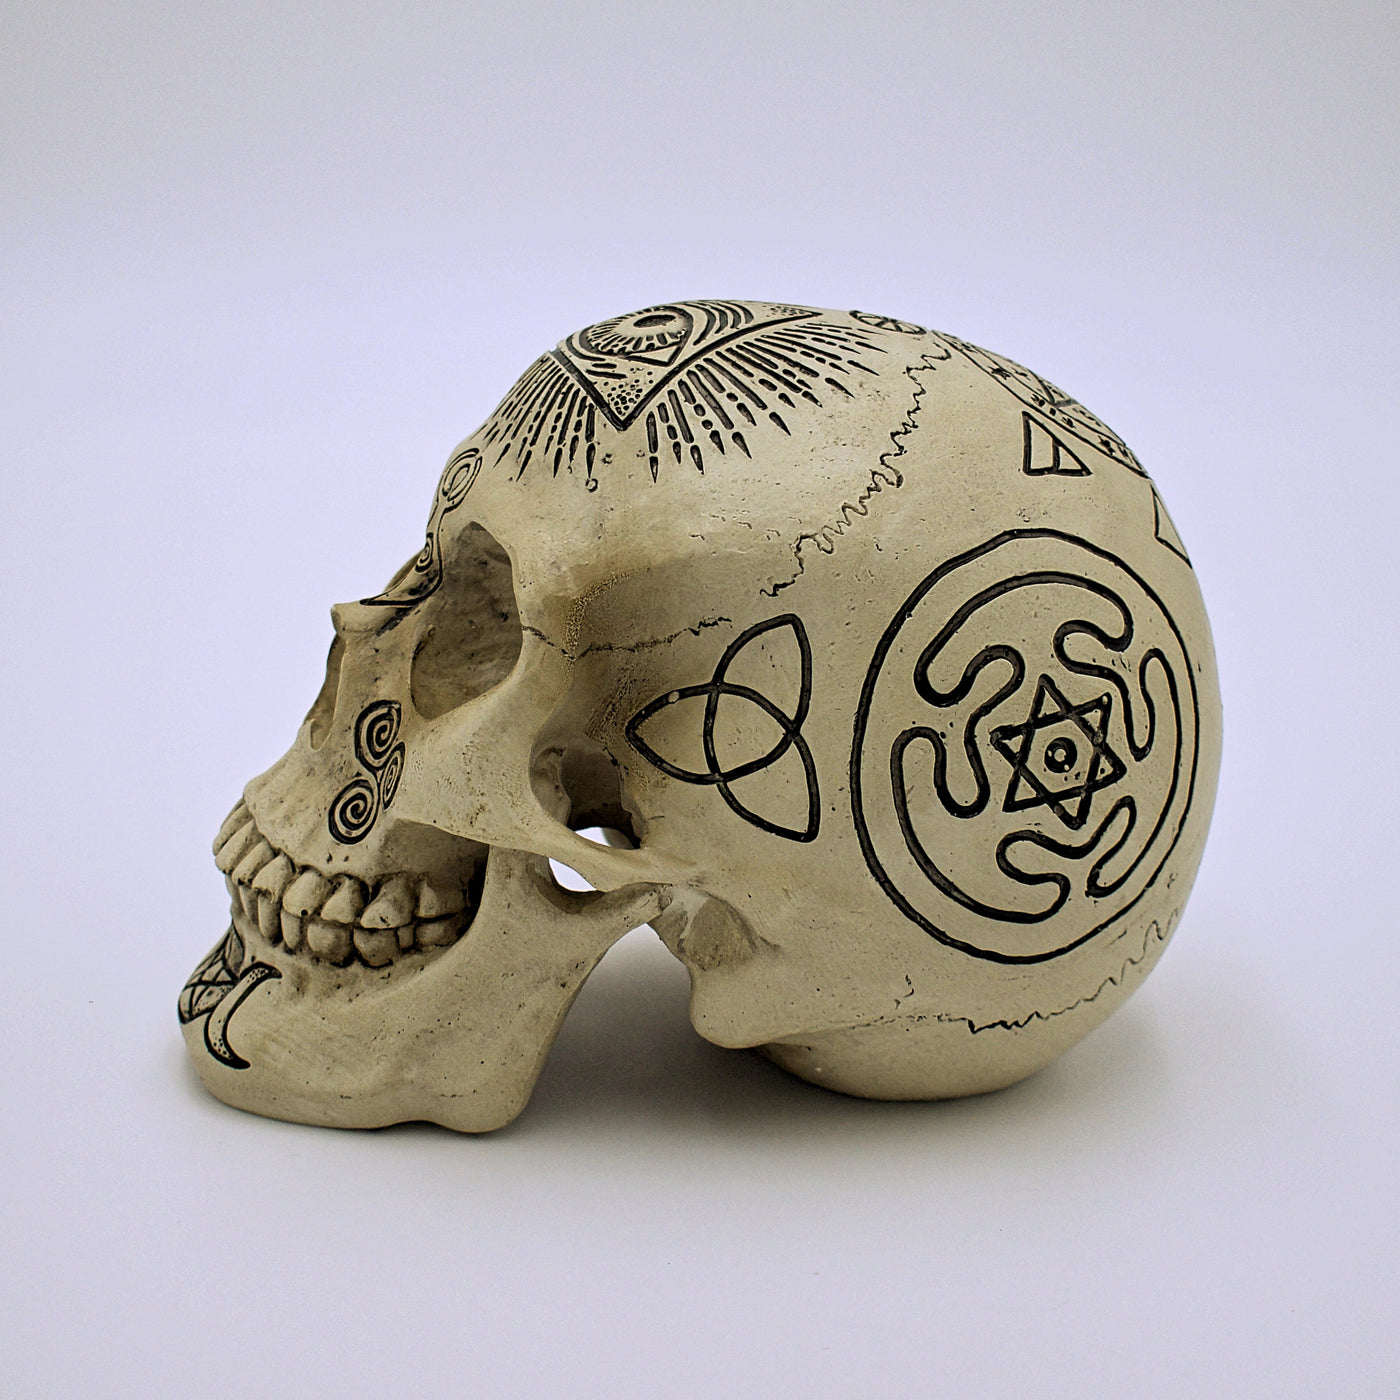 Witchcraft Symbols Skull Sculpture - The Cranio Collections